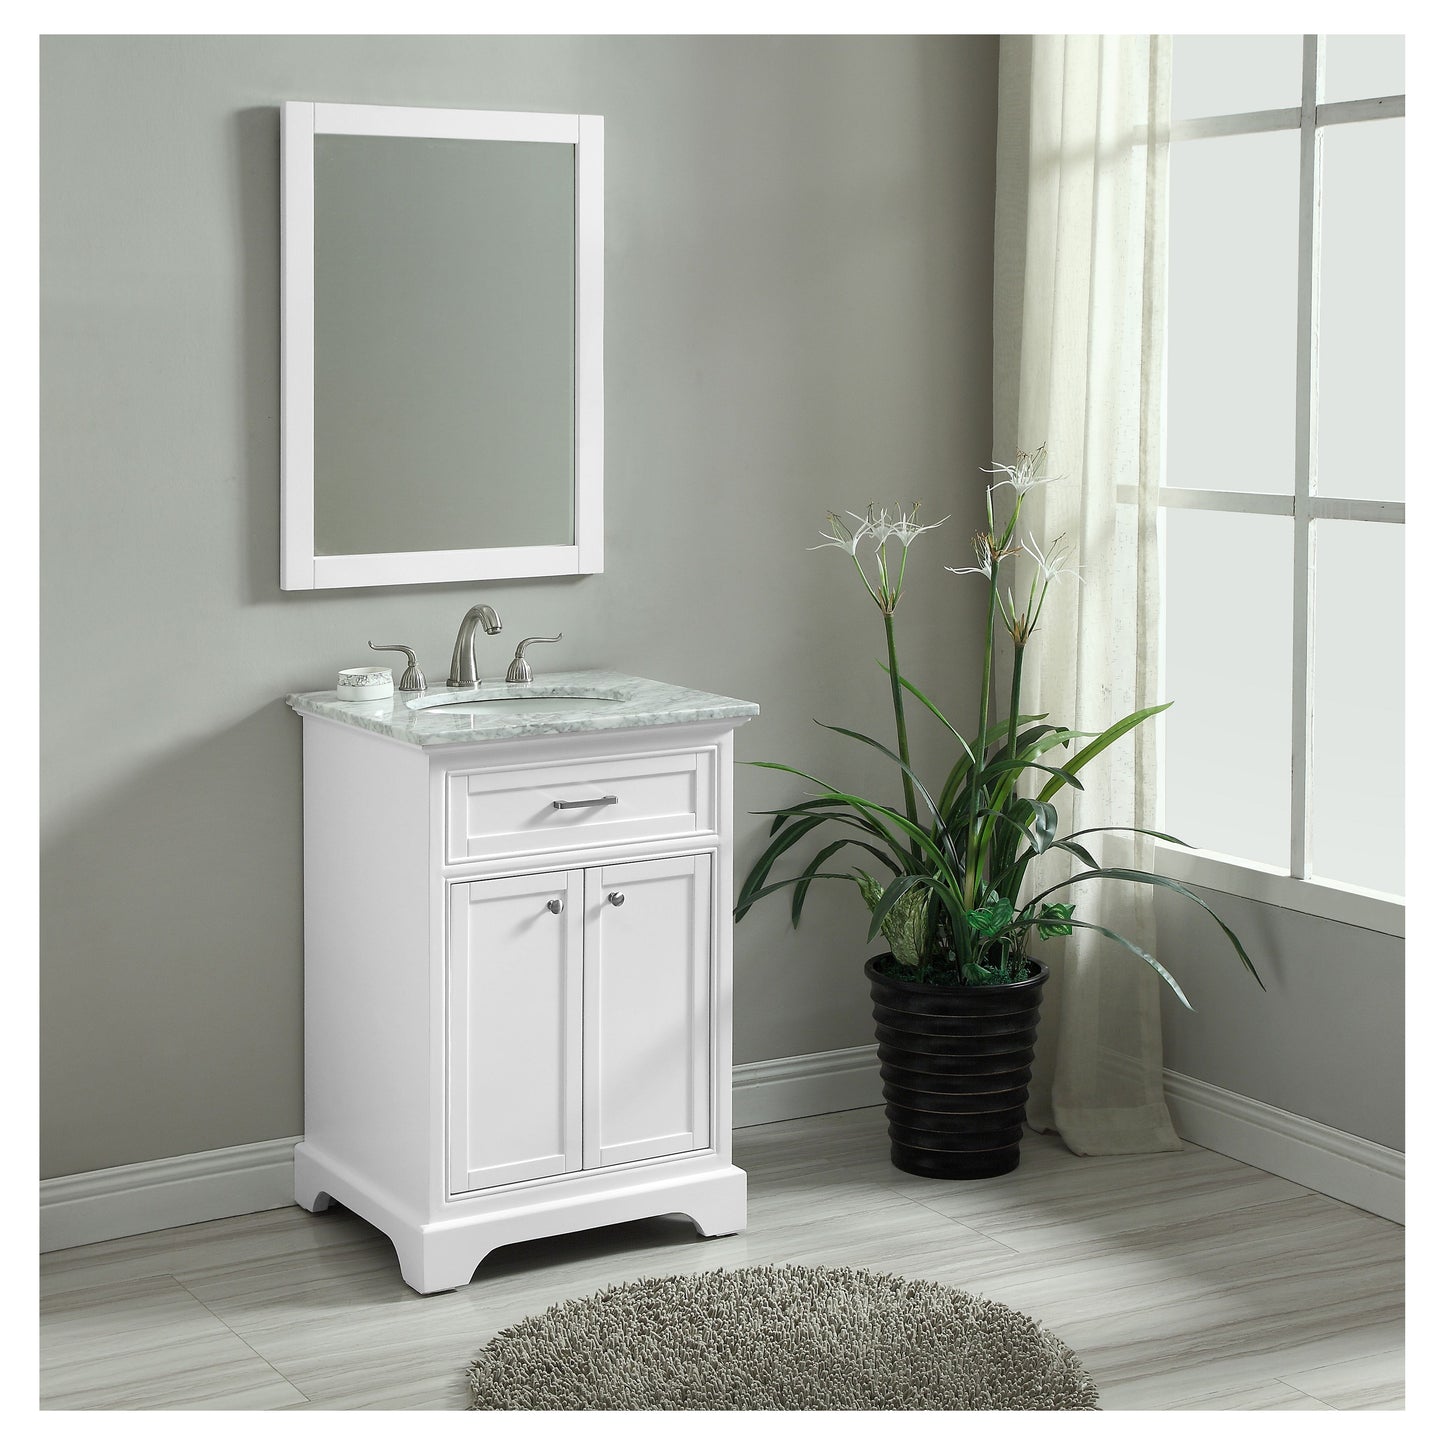 VF15024WH 24" Single Bathroom Vanity Set in White